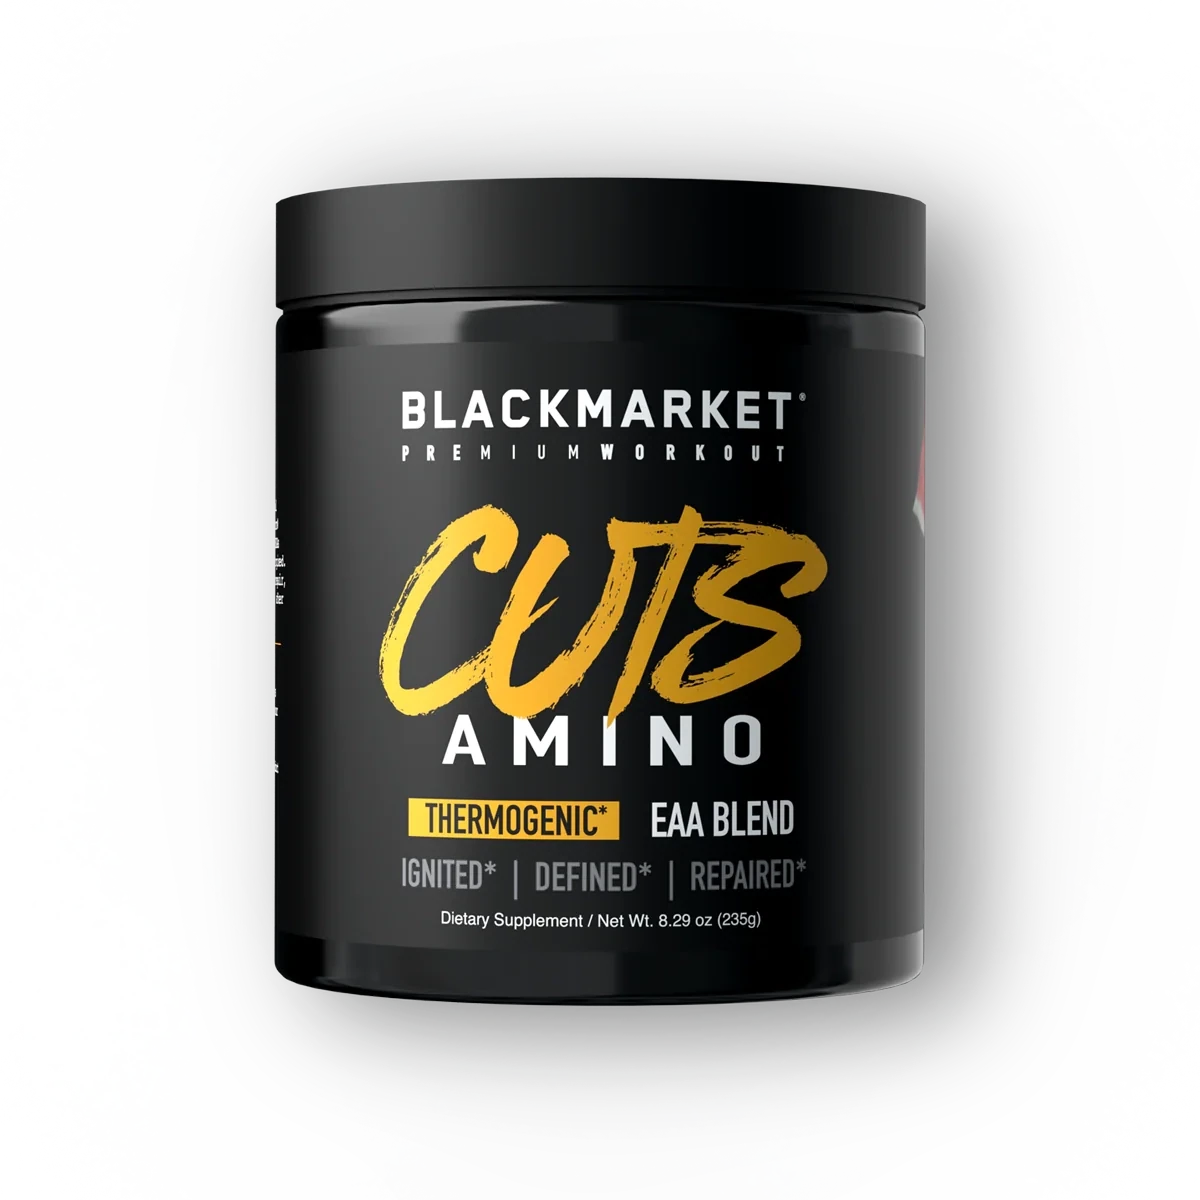 Black Market Cuts Amino